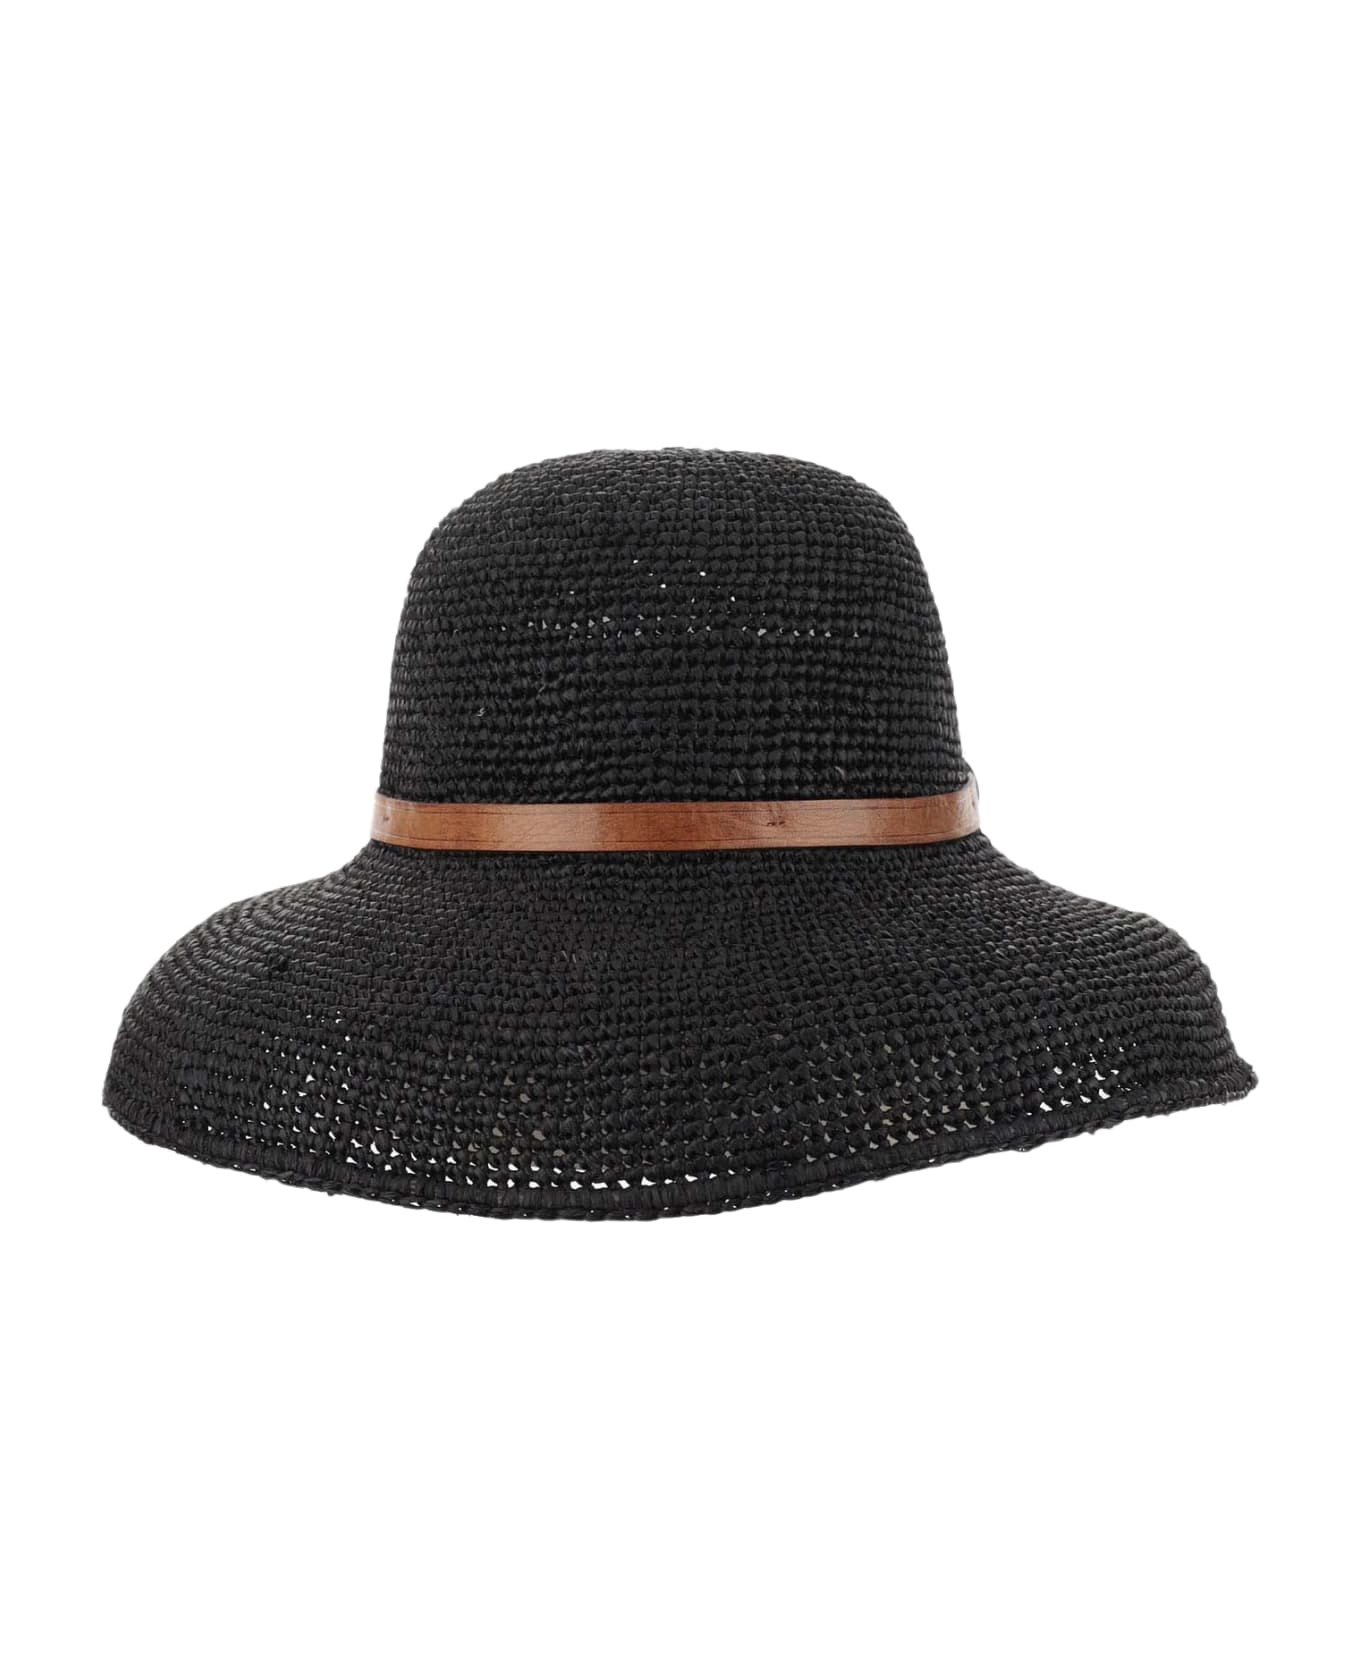 Ibeliv Rova Hat - Black